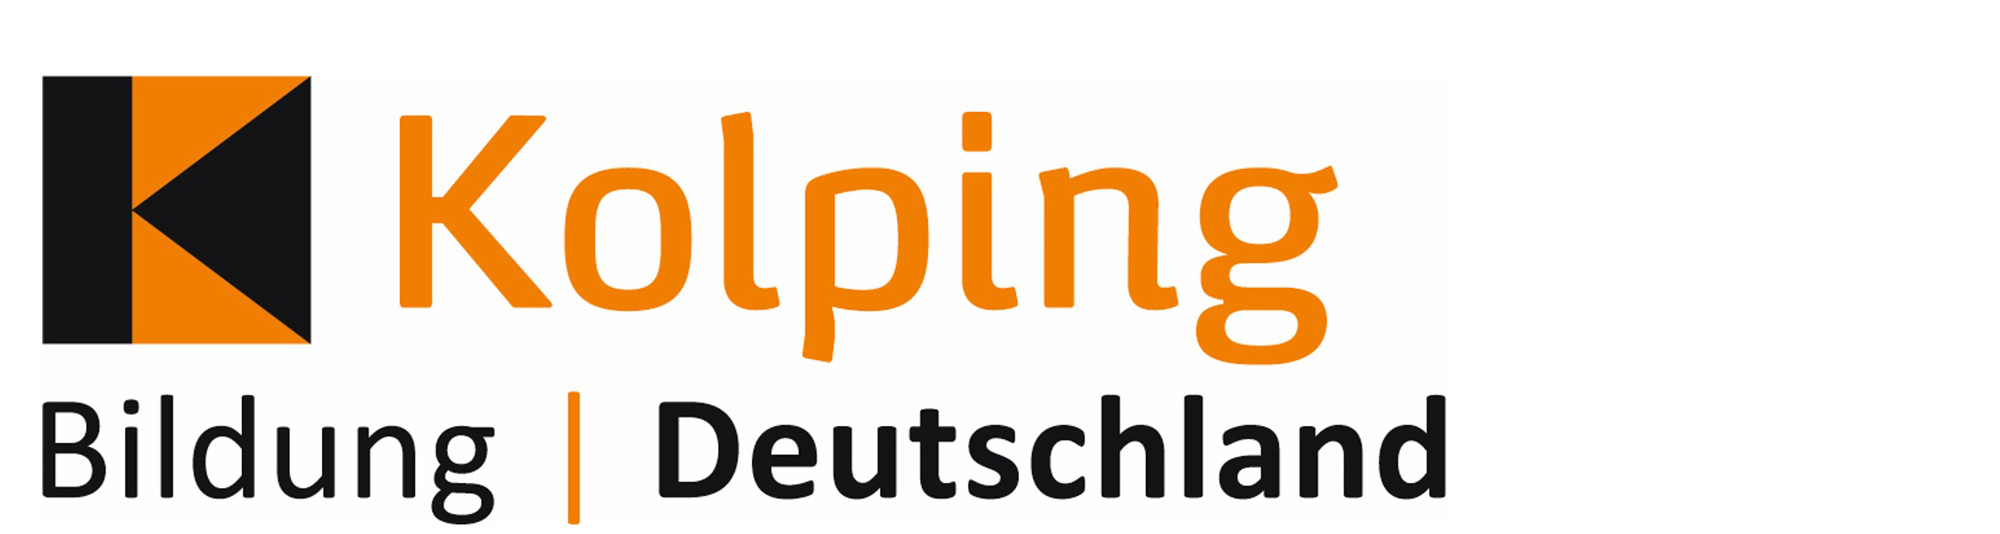 Kolping Bildung Deutschland gGmbH - Pflegeschule Recklinghausen